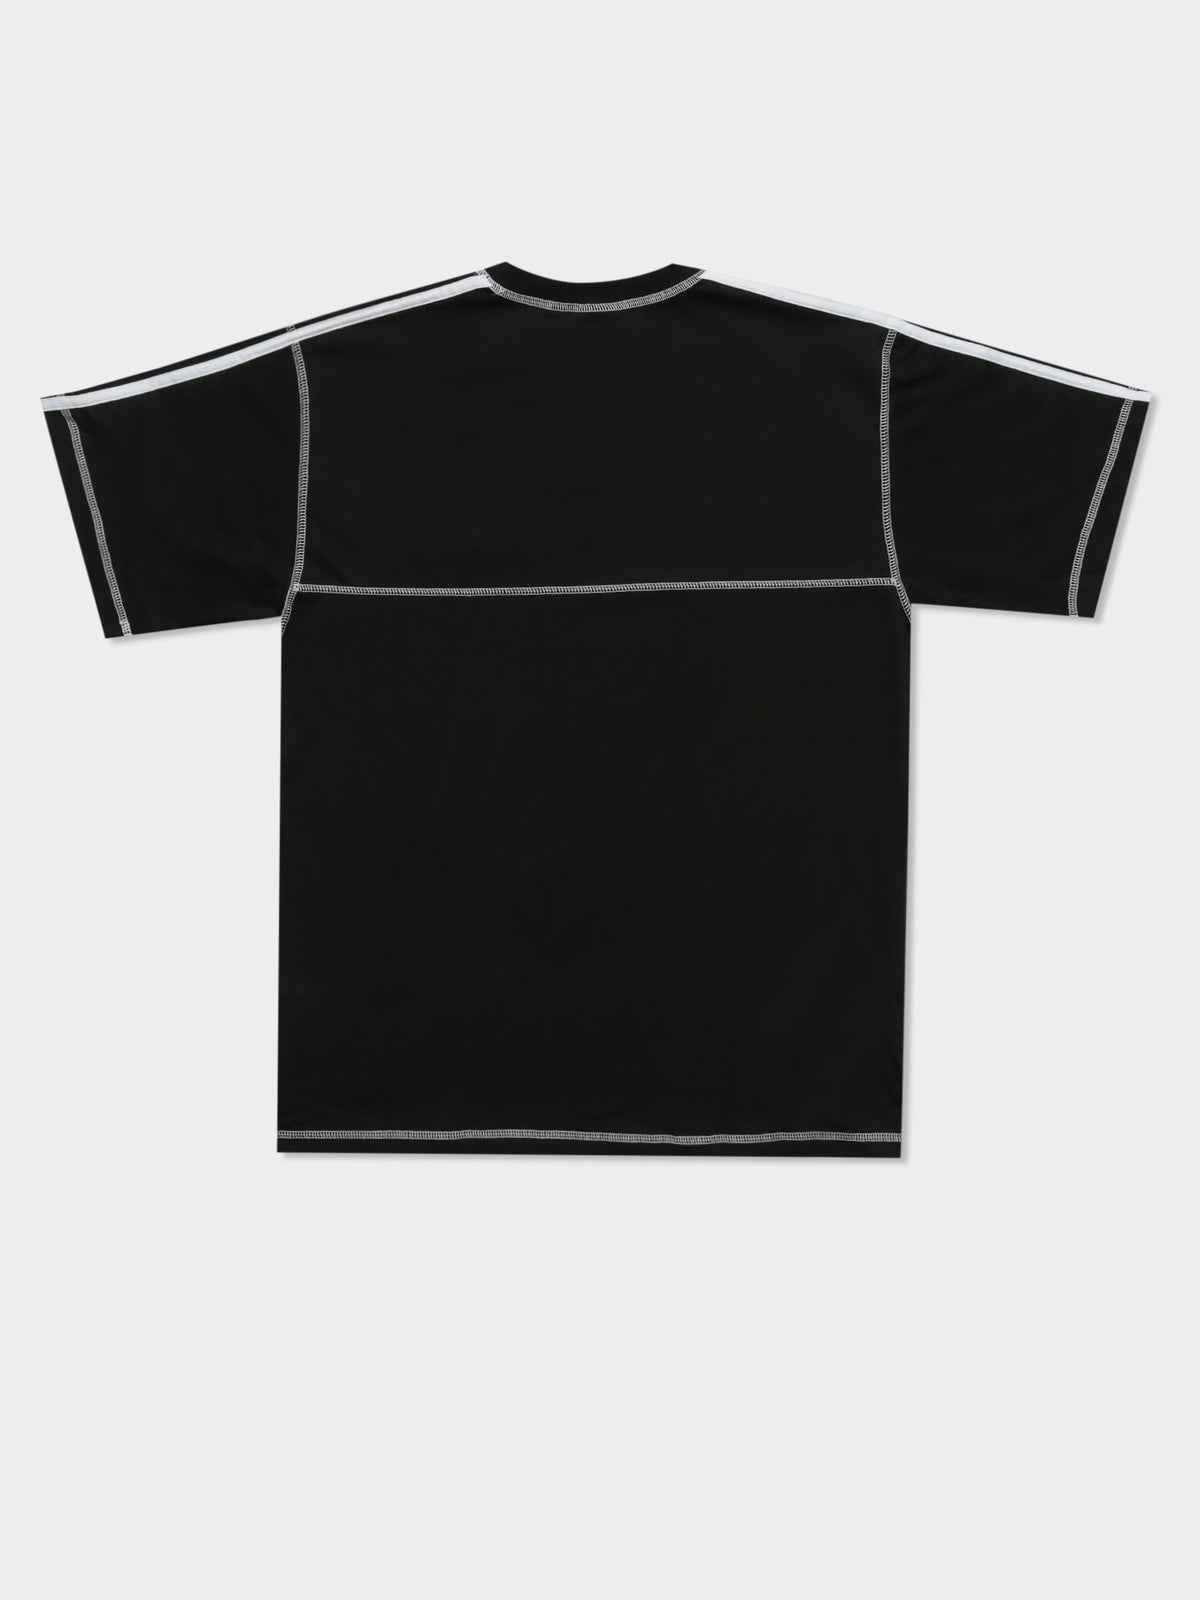 Contrast Stitch T-Shirt in Black